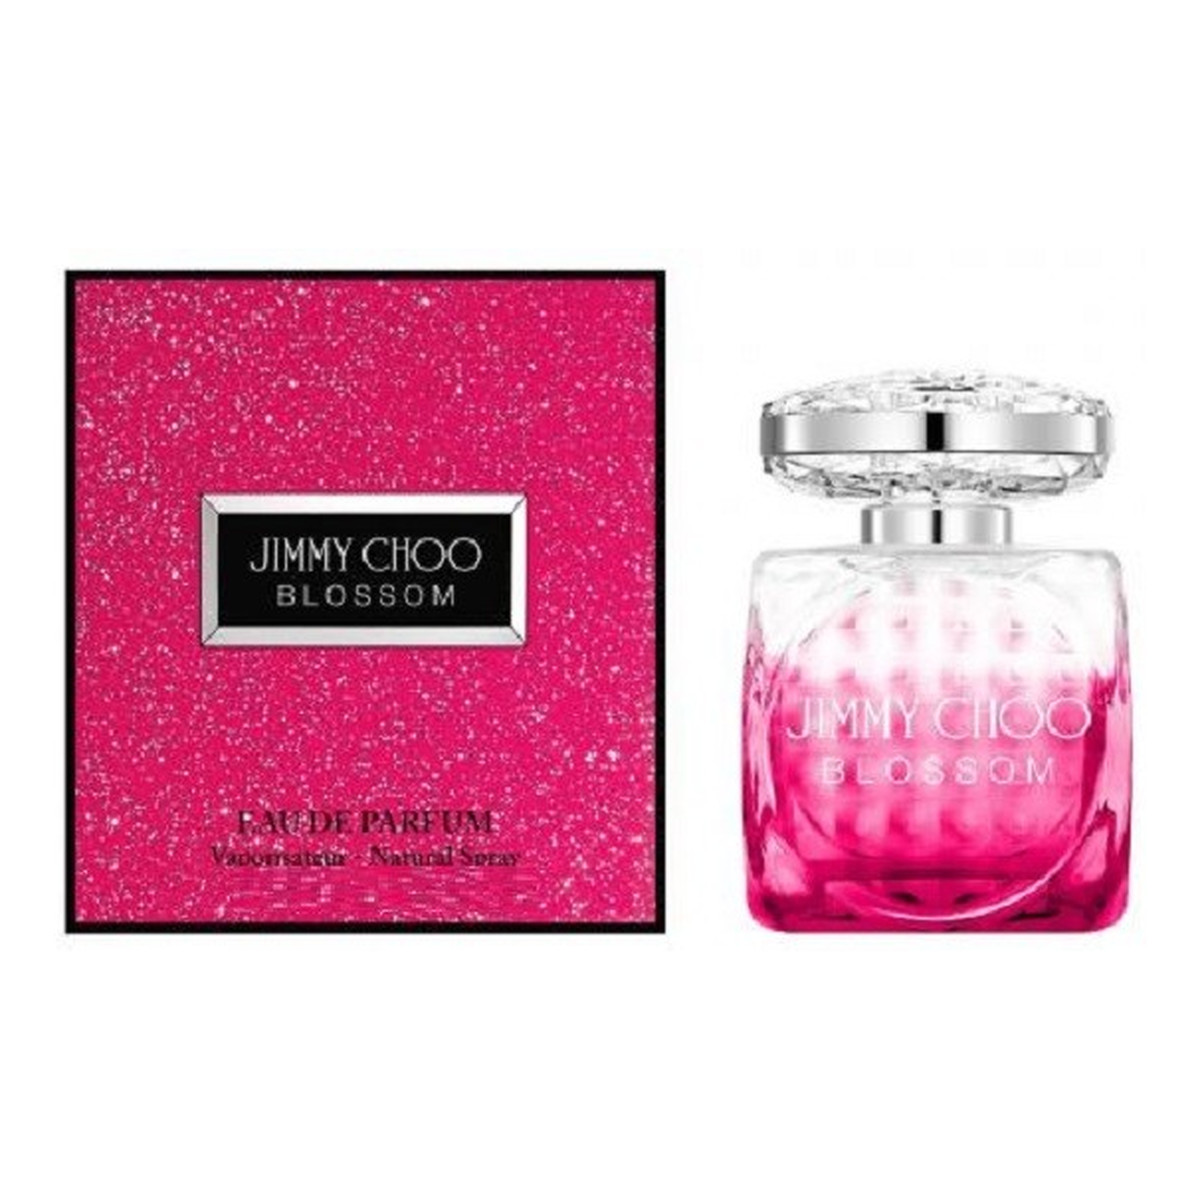 Jimmy Choo Blossom woda perfumowana 40ml